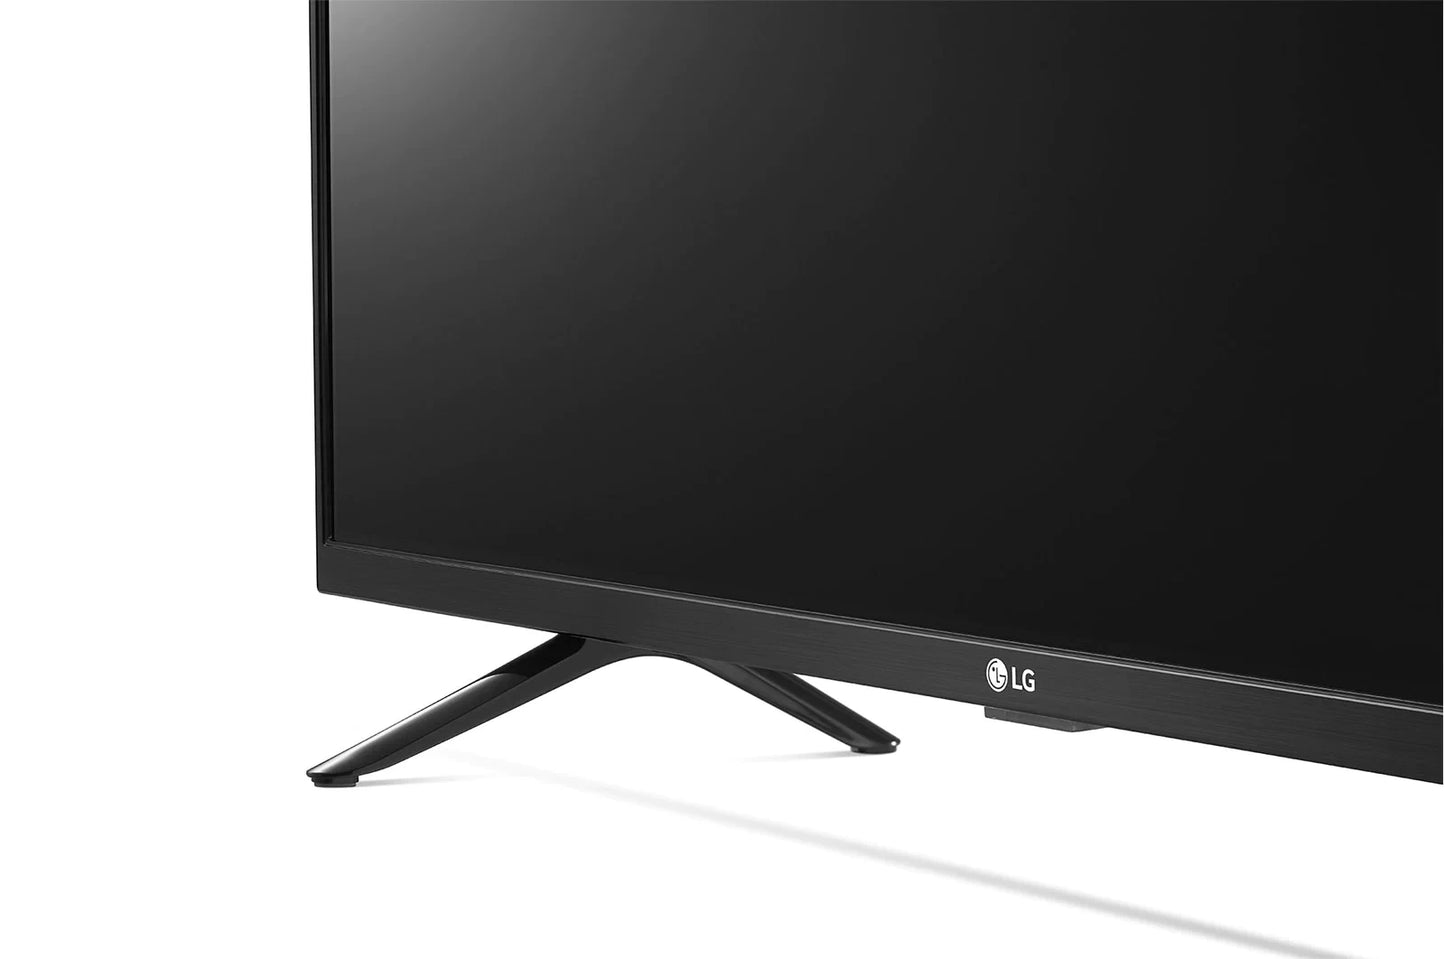 LG 32 inch LED TV FULL HD LR500BPVA